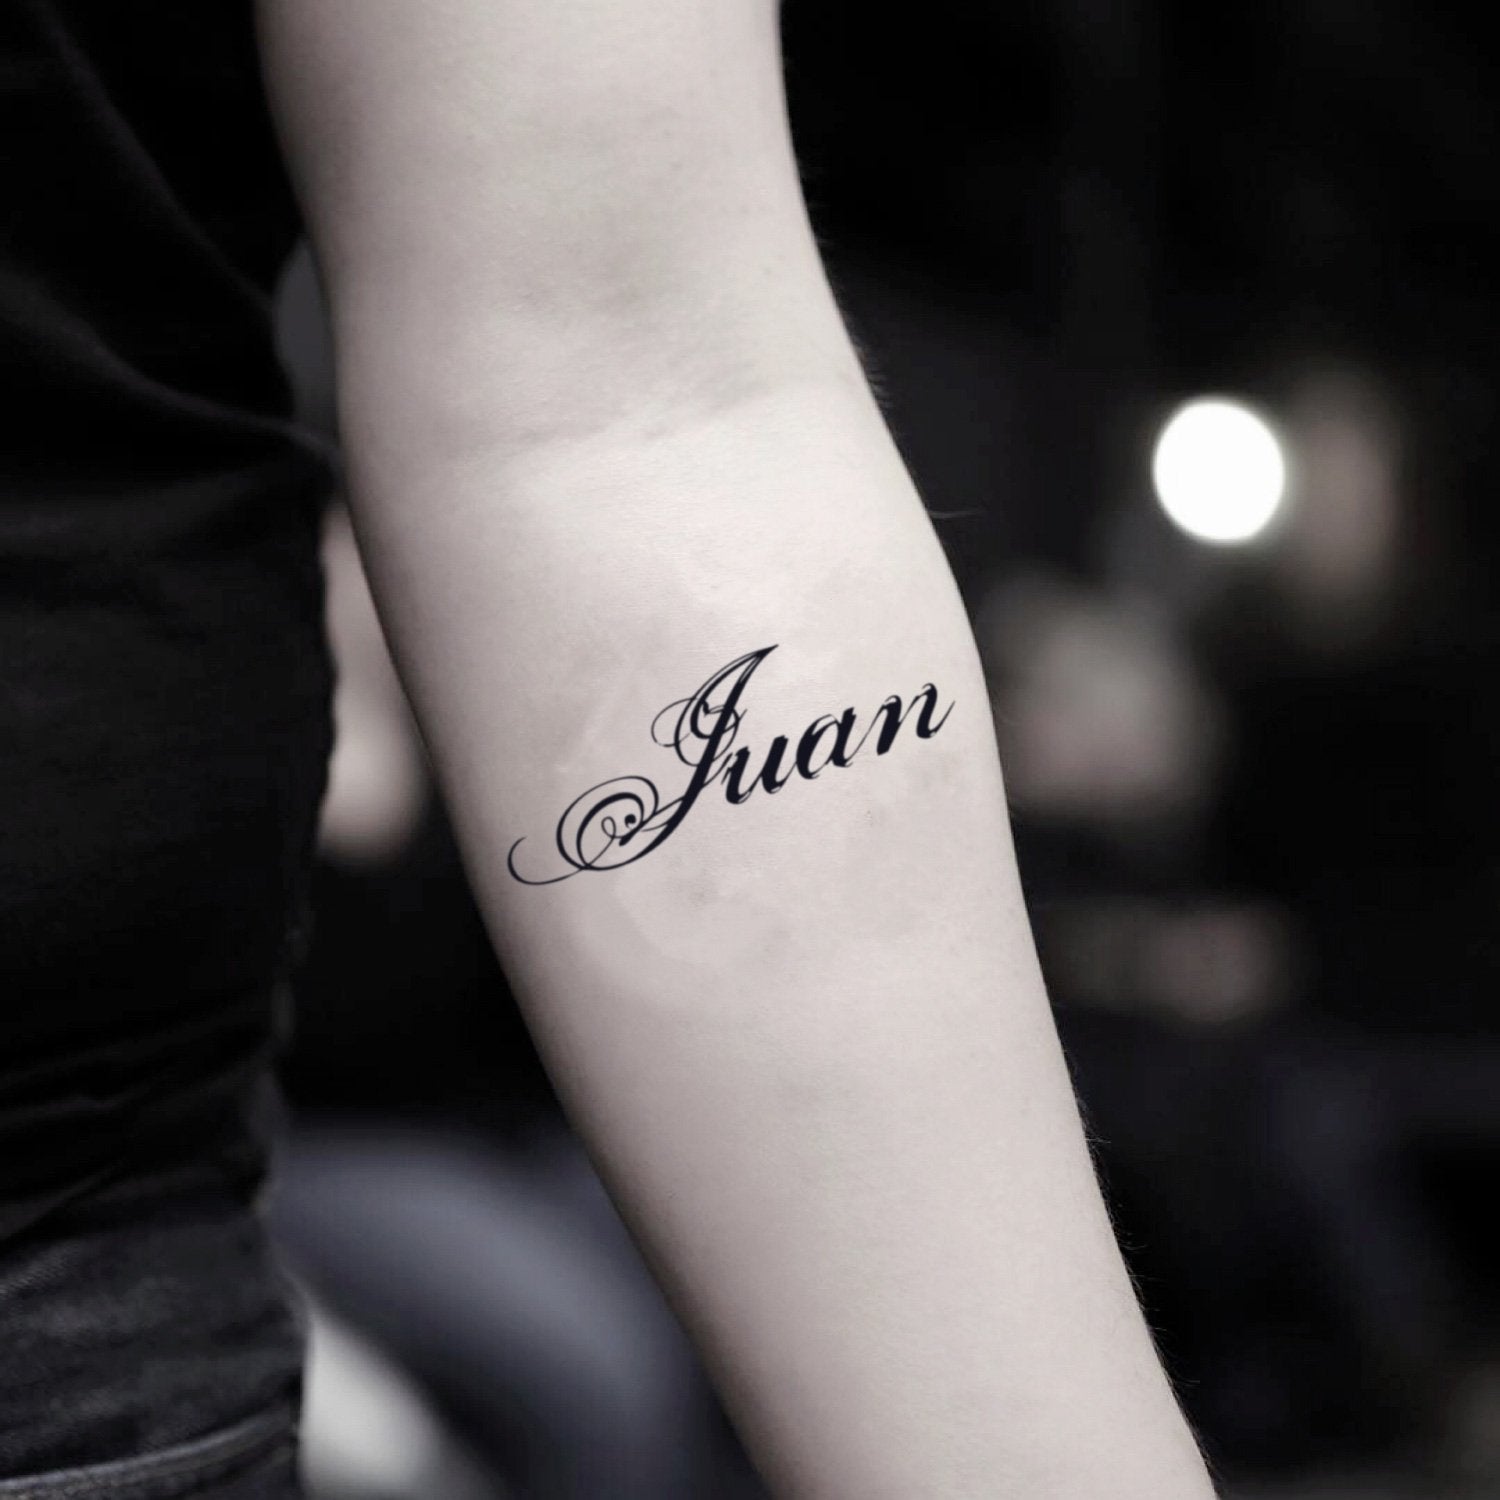 fake small juan lettering temporary tattoo sticker design idea on inner arm